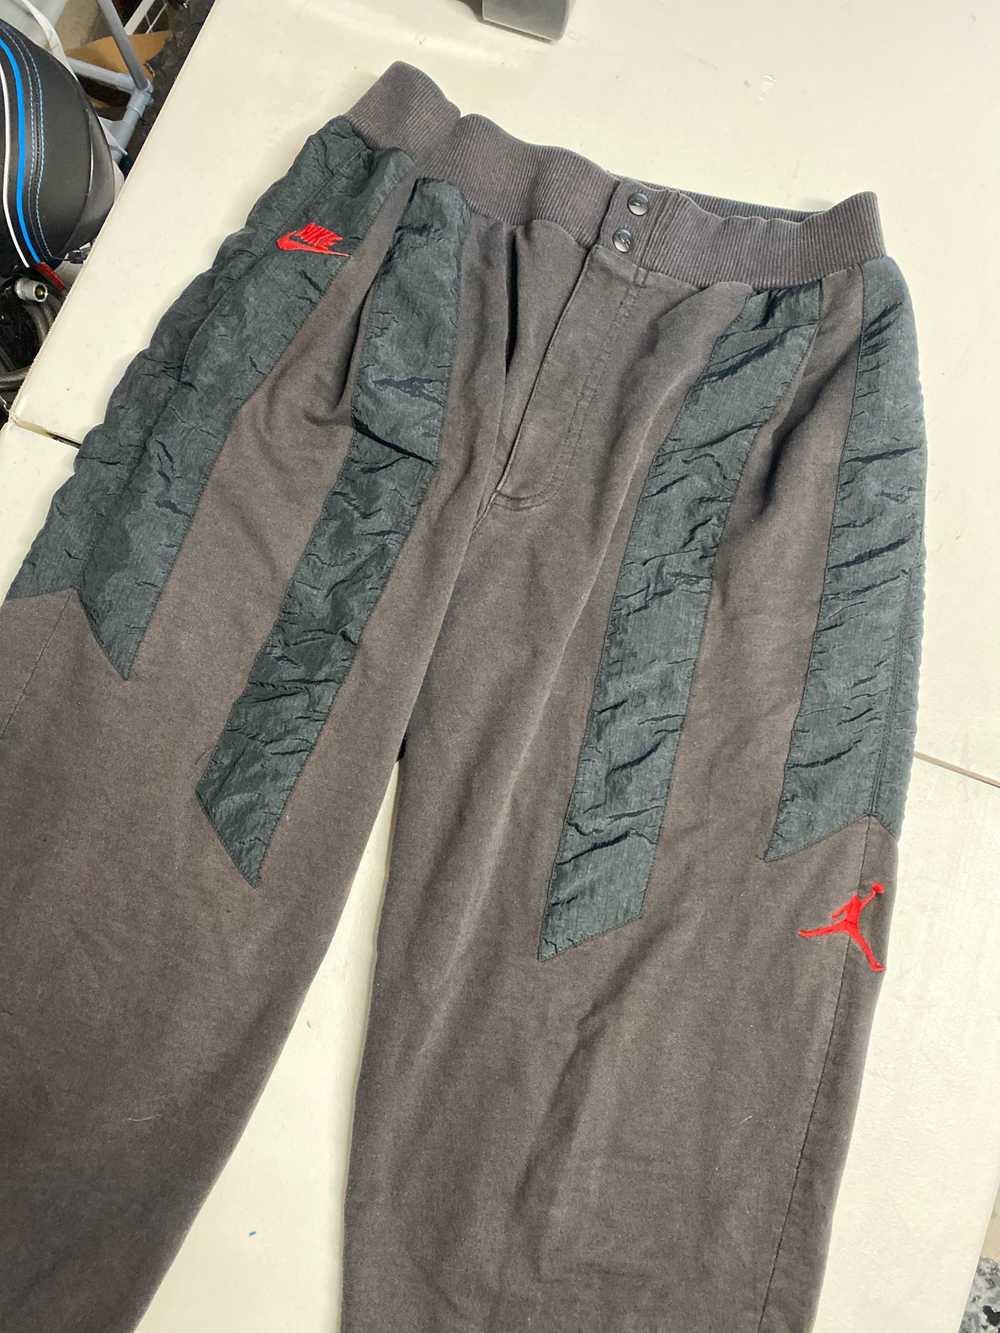 Faded Nike / Jordan sweats - image 5